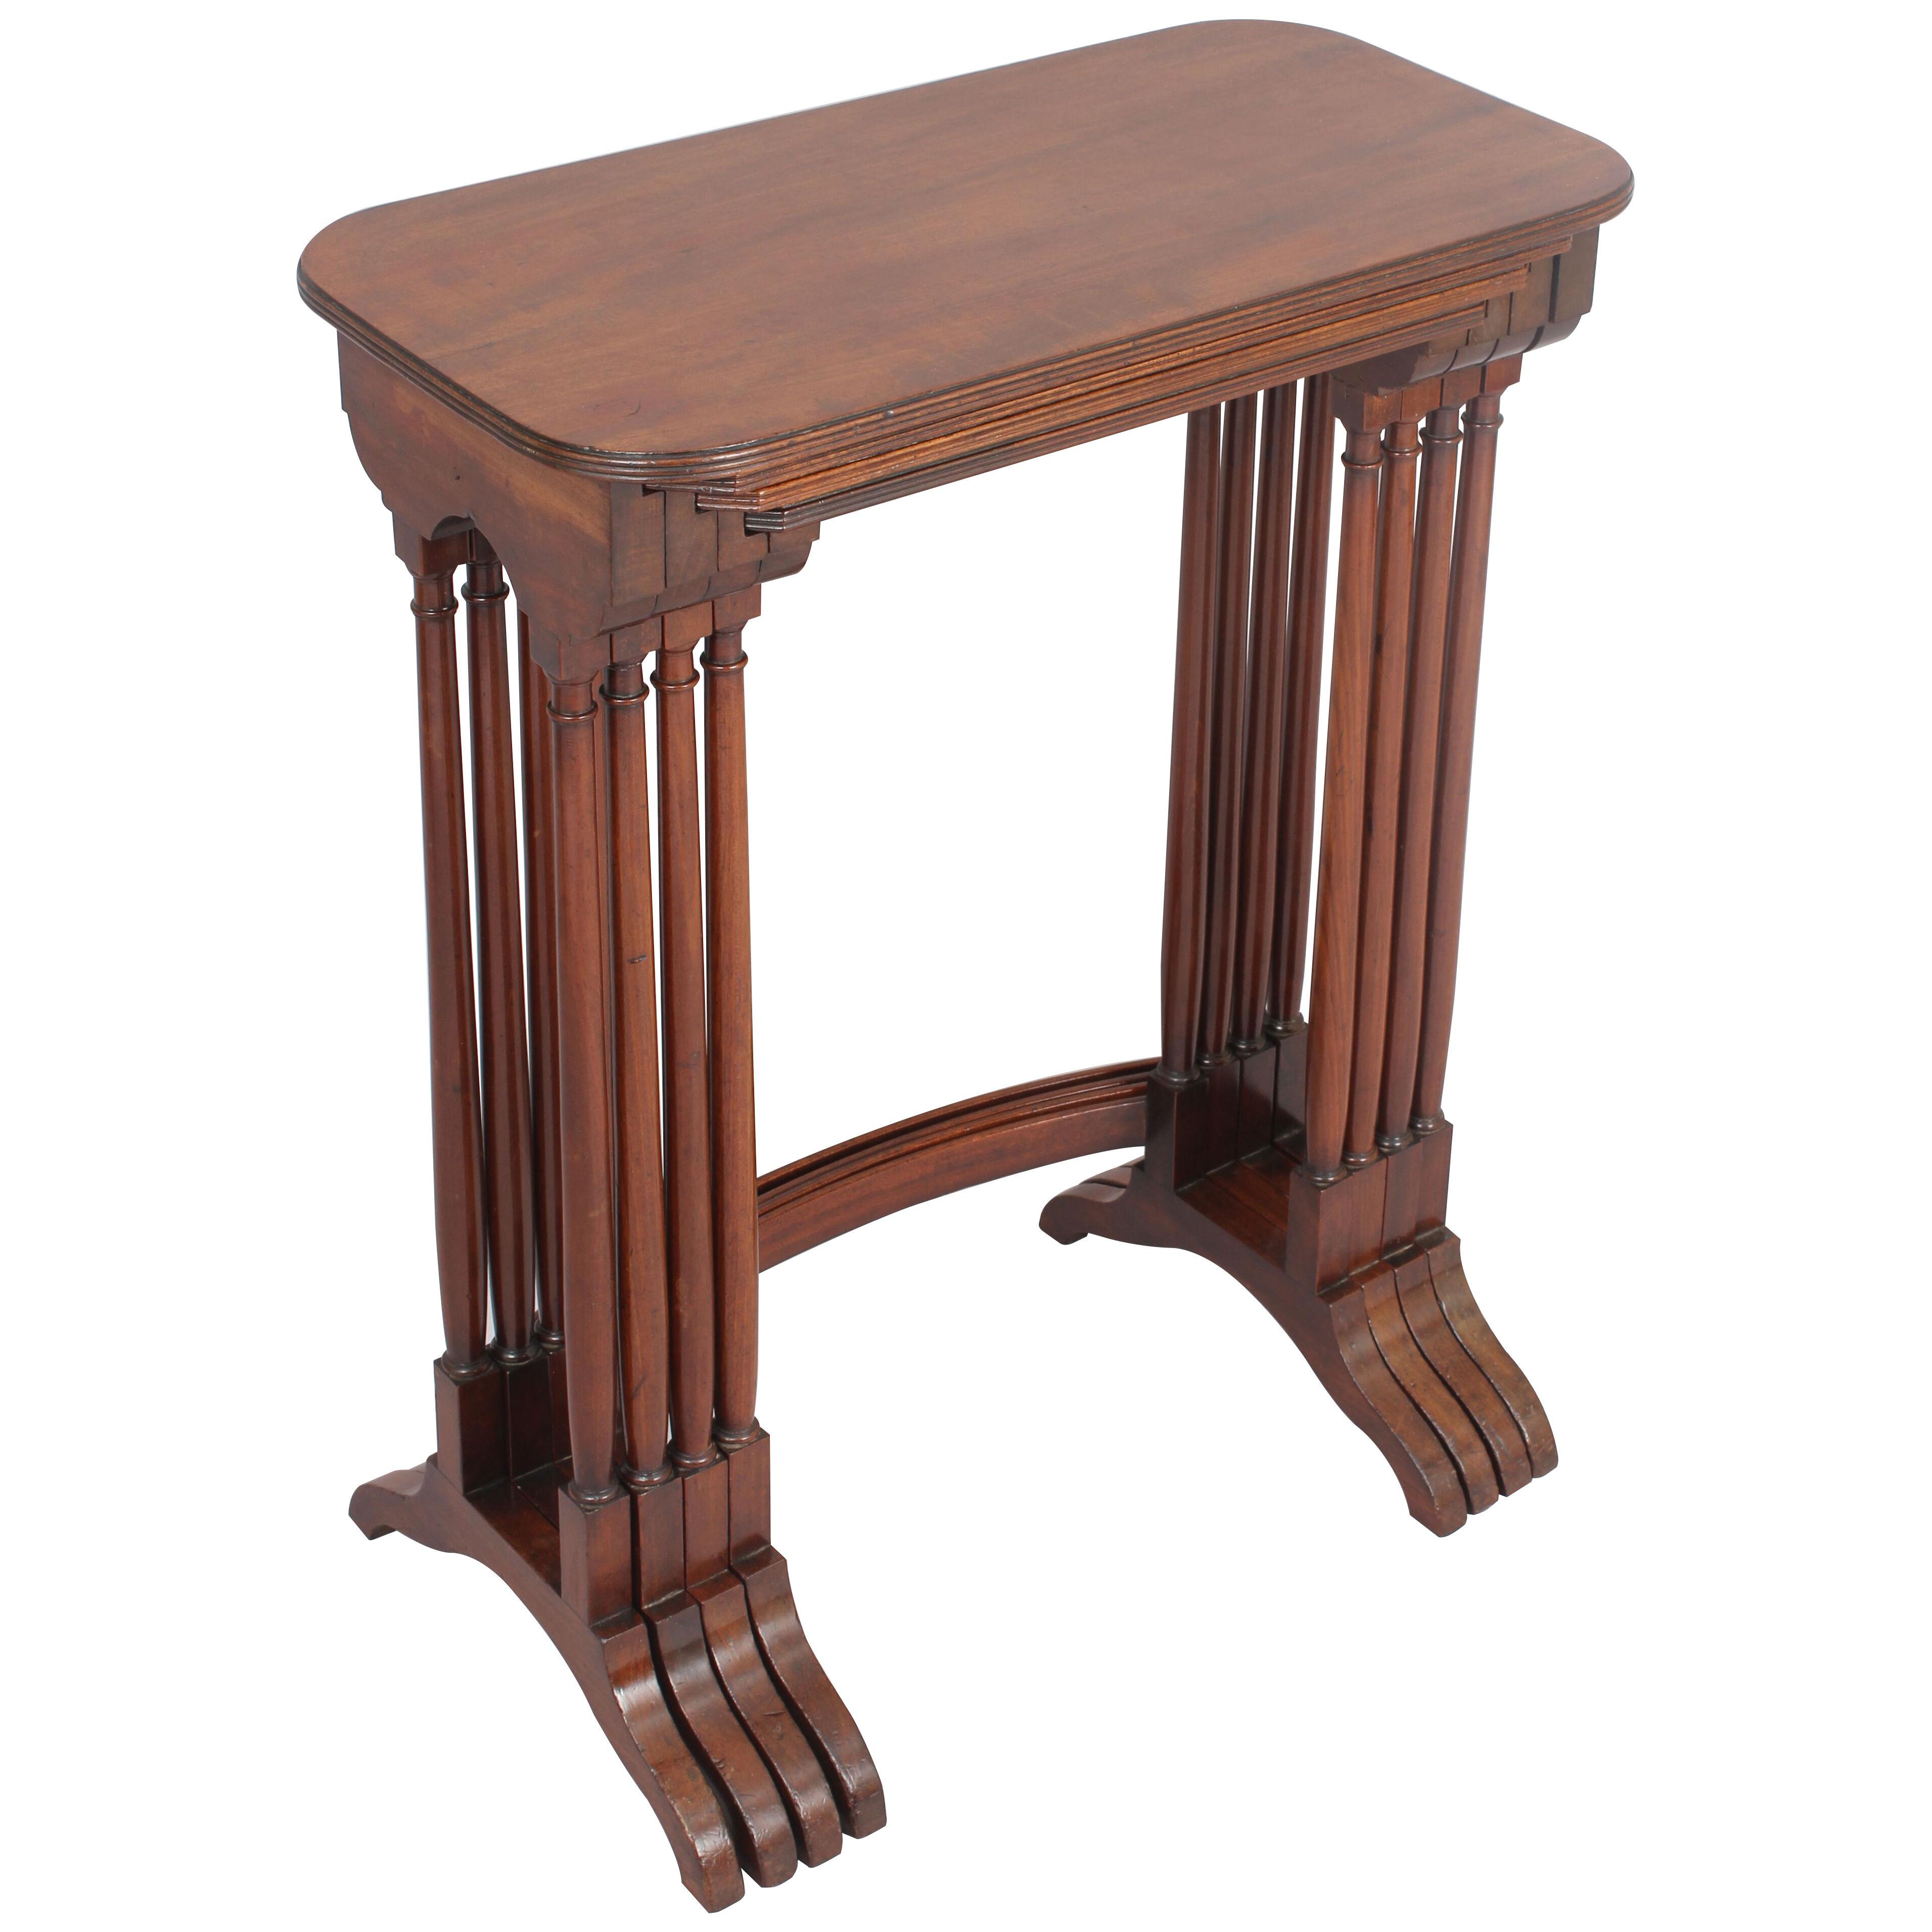 Fine quality George III period mahogany set of quartetto tables